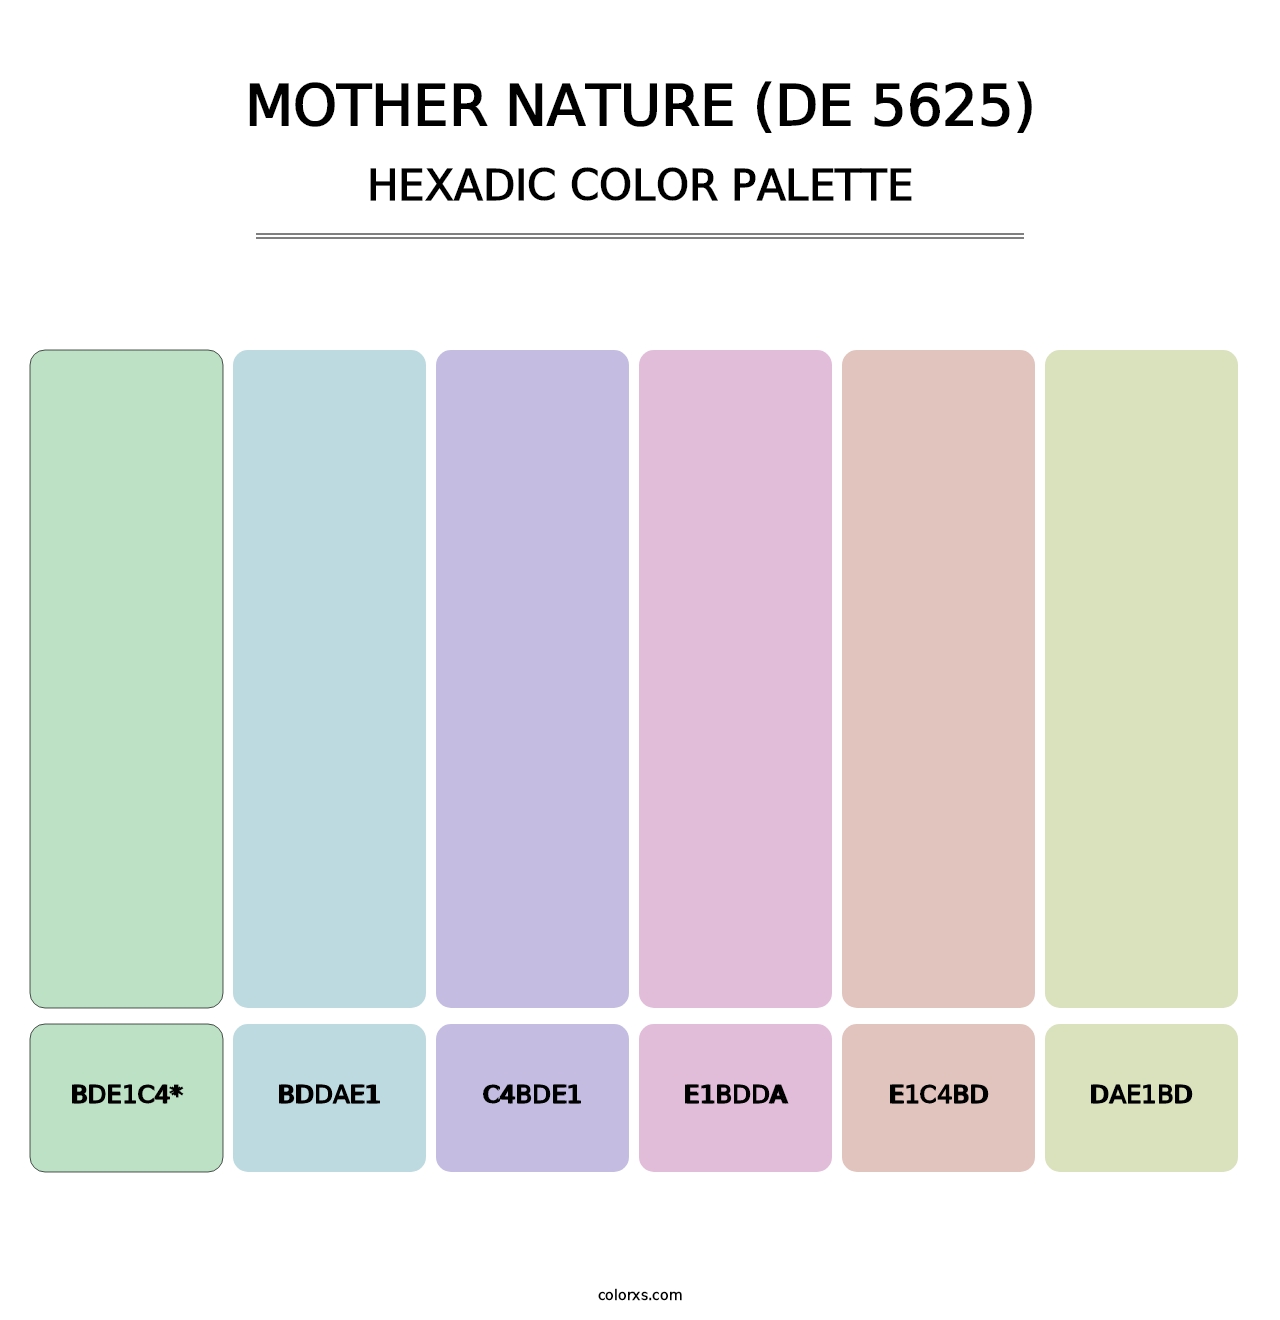 Mother Nature (DE 5625) - Hexadic Color Palette